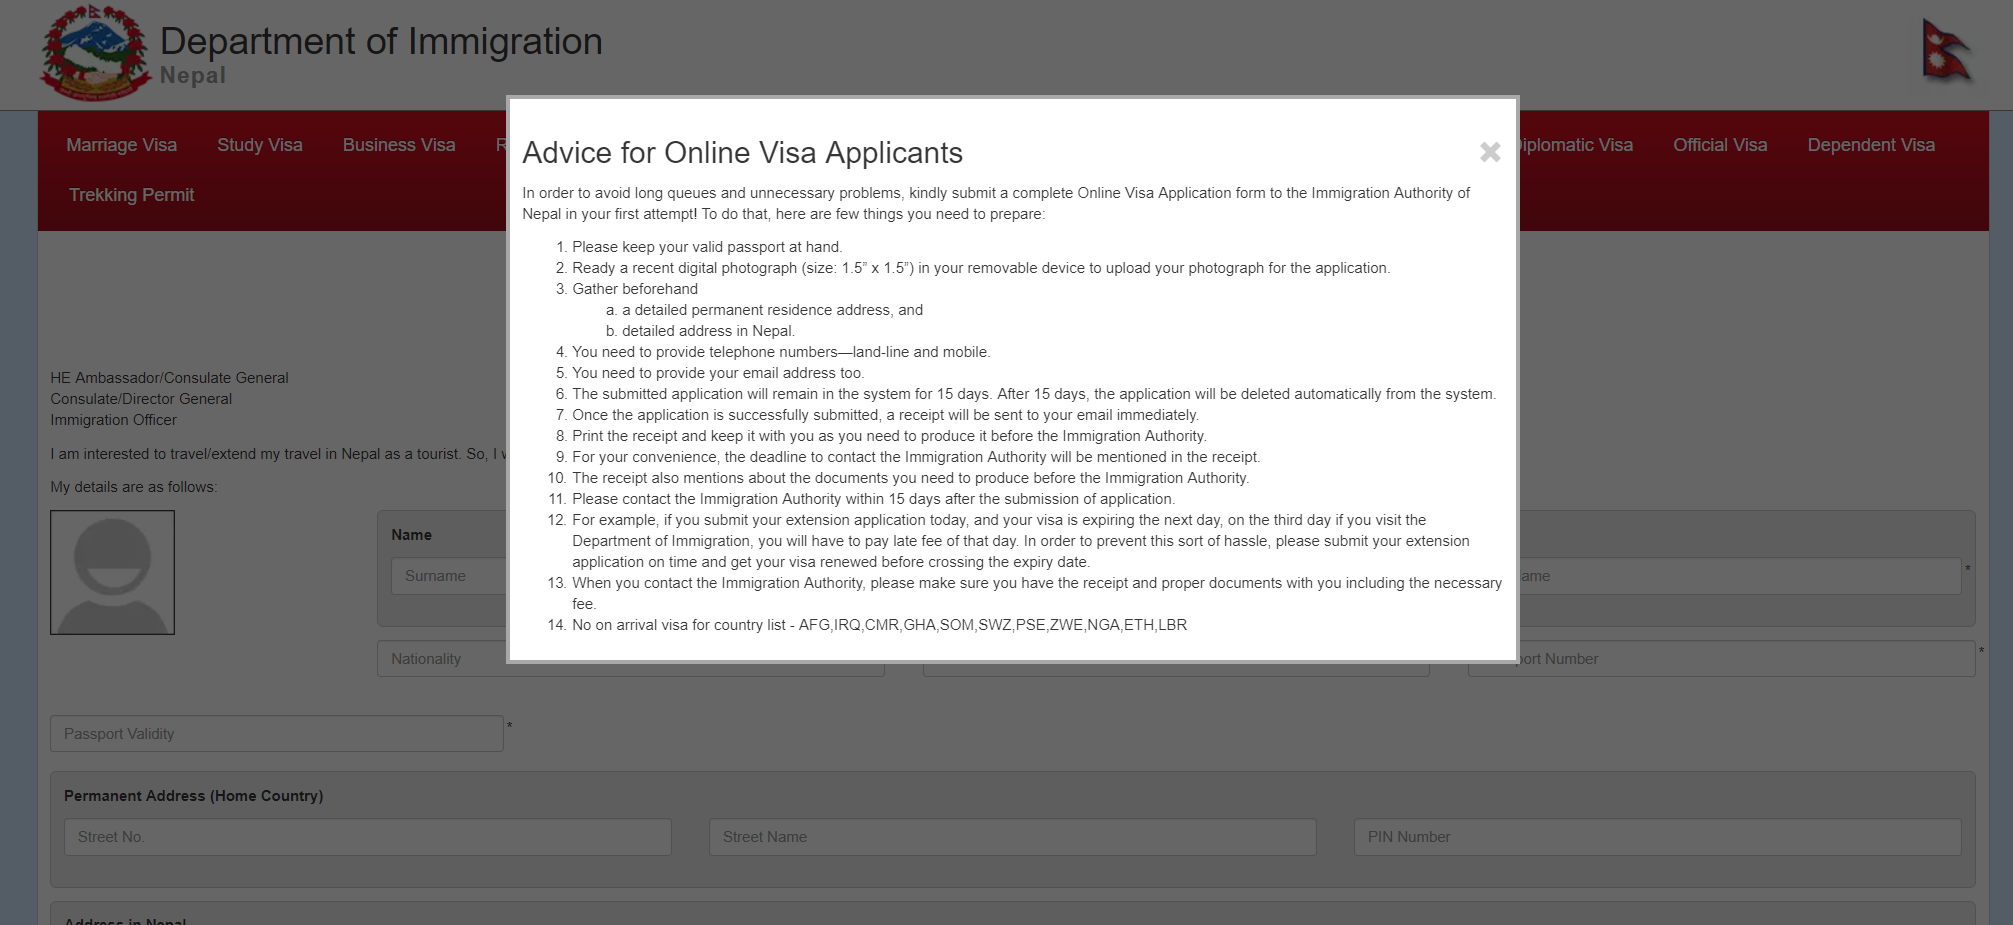 Application for online visa in Nepal